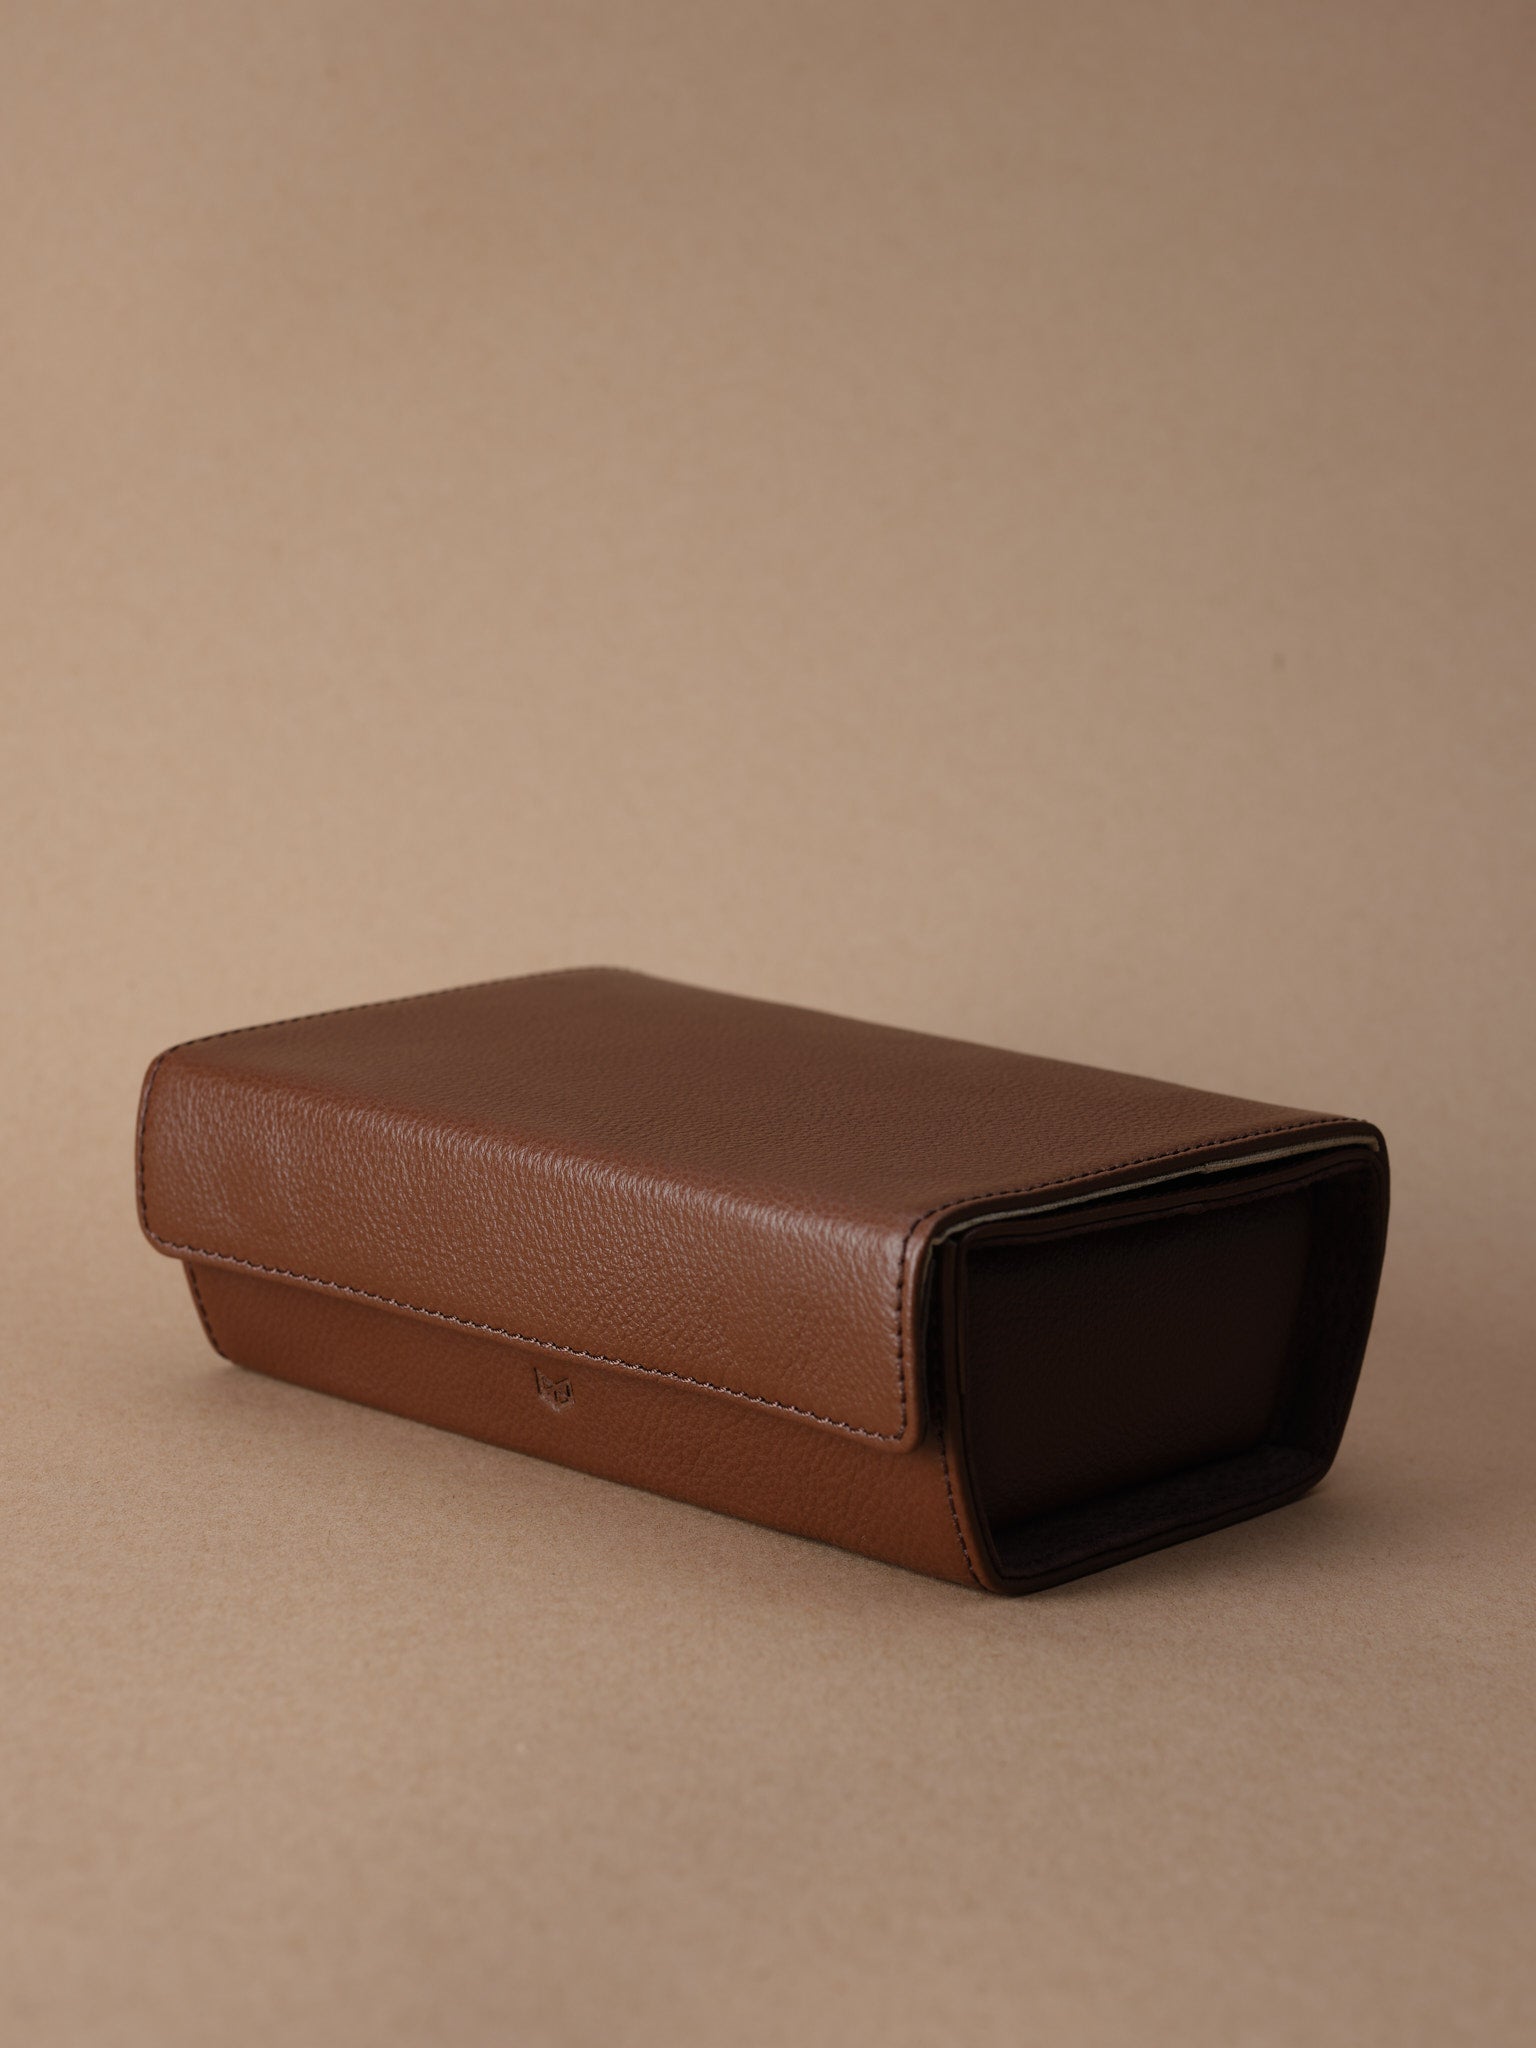 eyewear travel case brown by Capra Leather